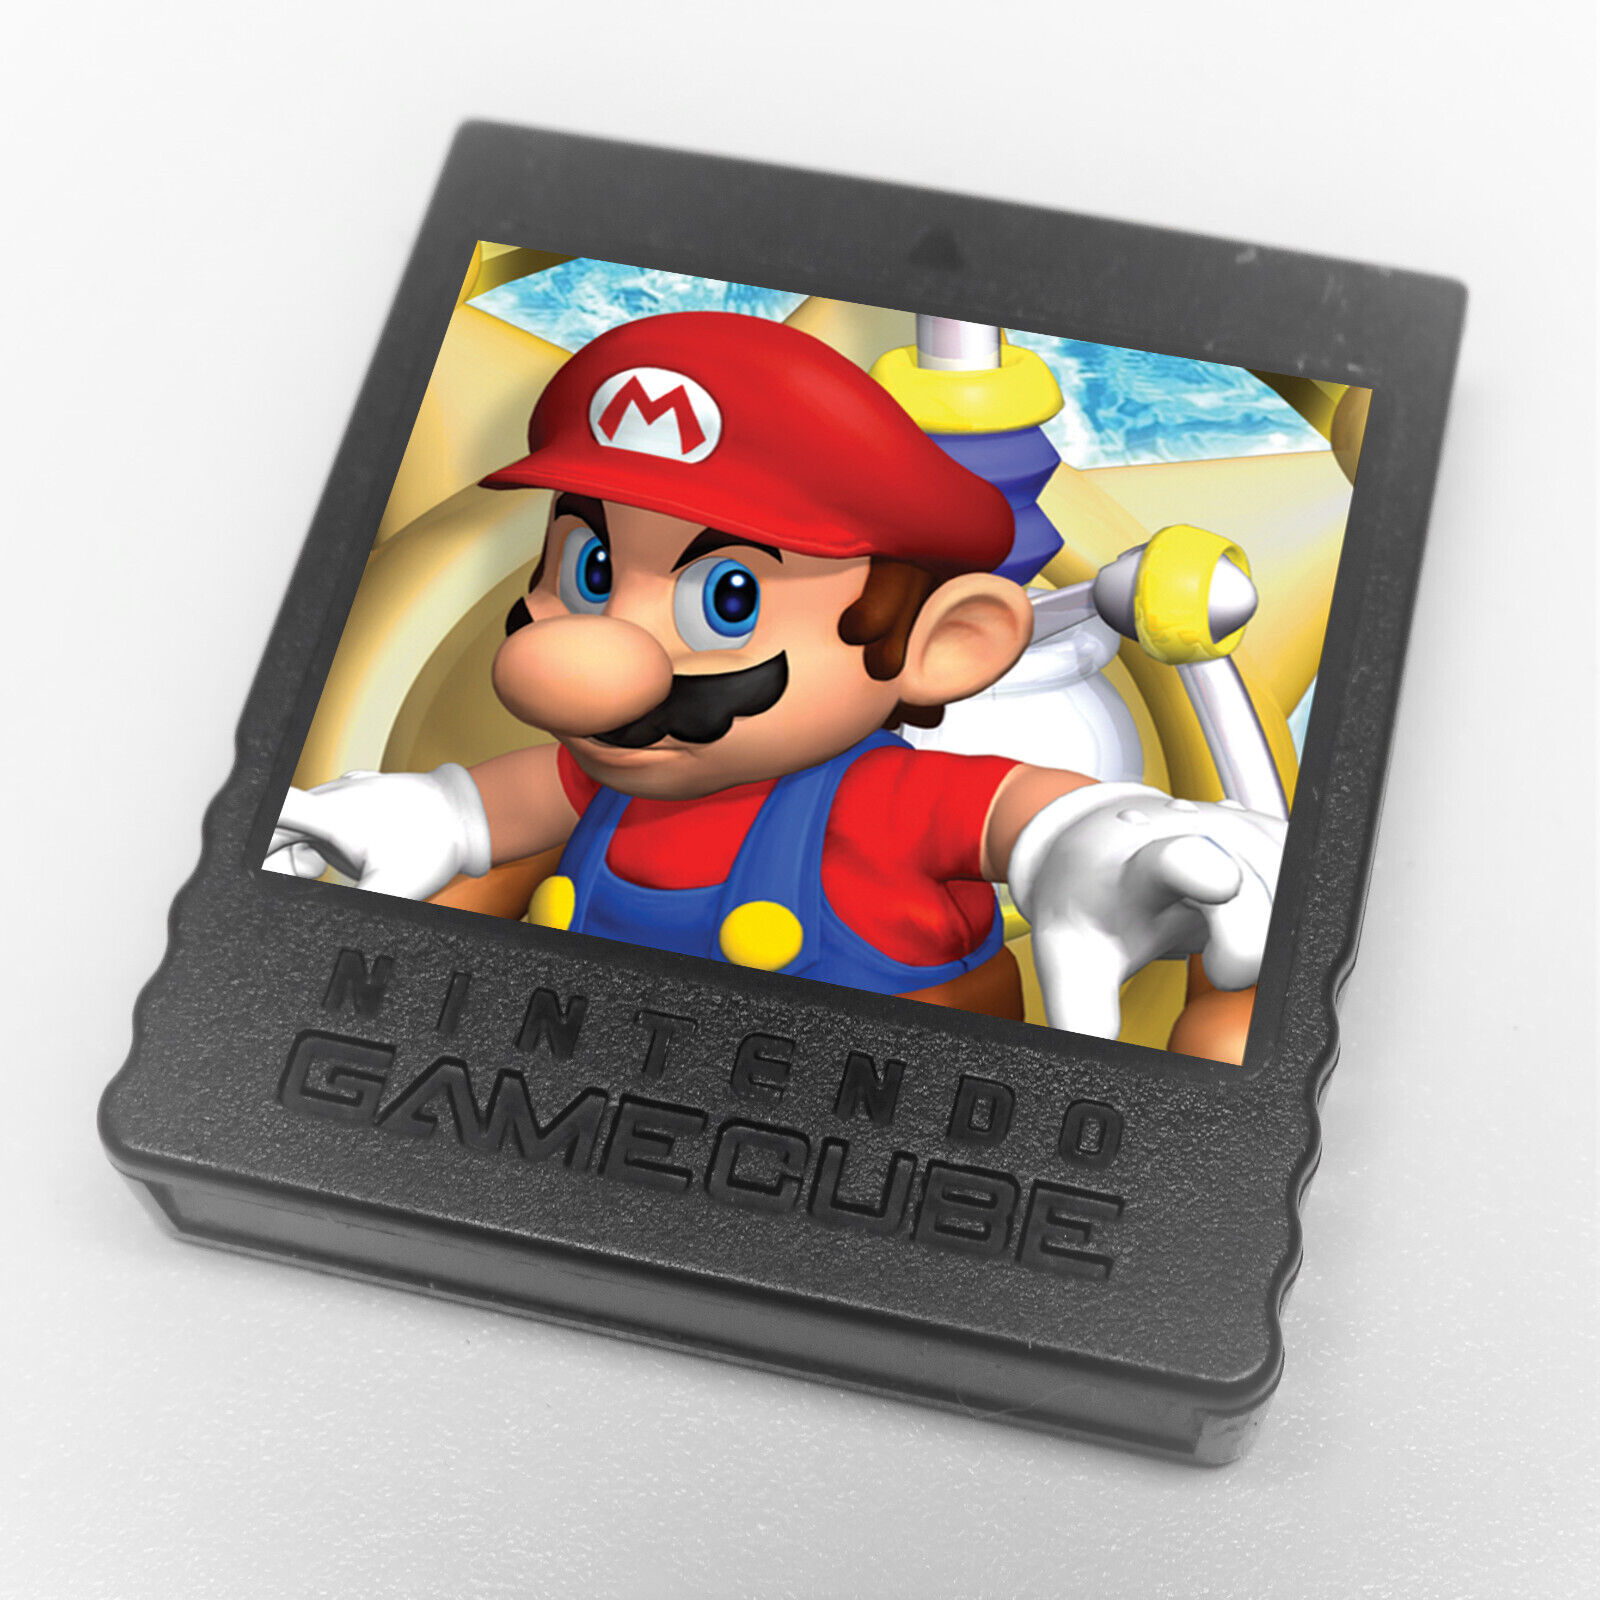 Custom Nintendo GameCube Memory Card Stickers - Catalog #1 - 200+ Designs